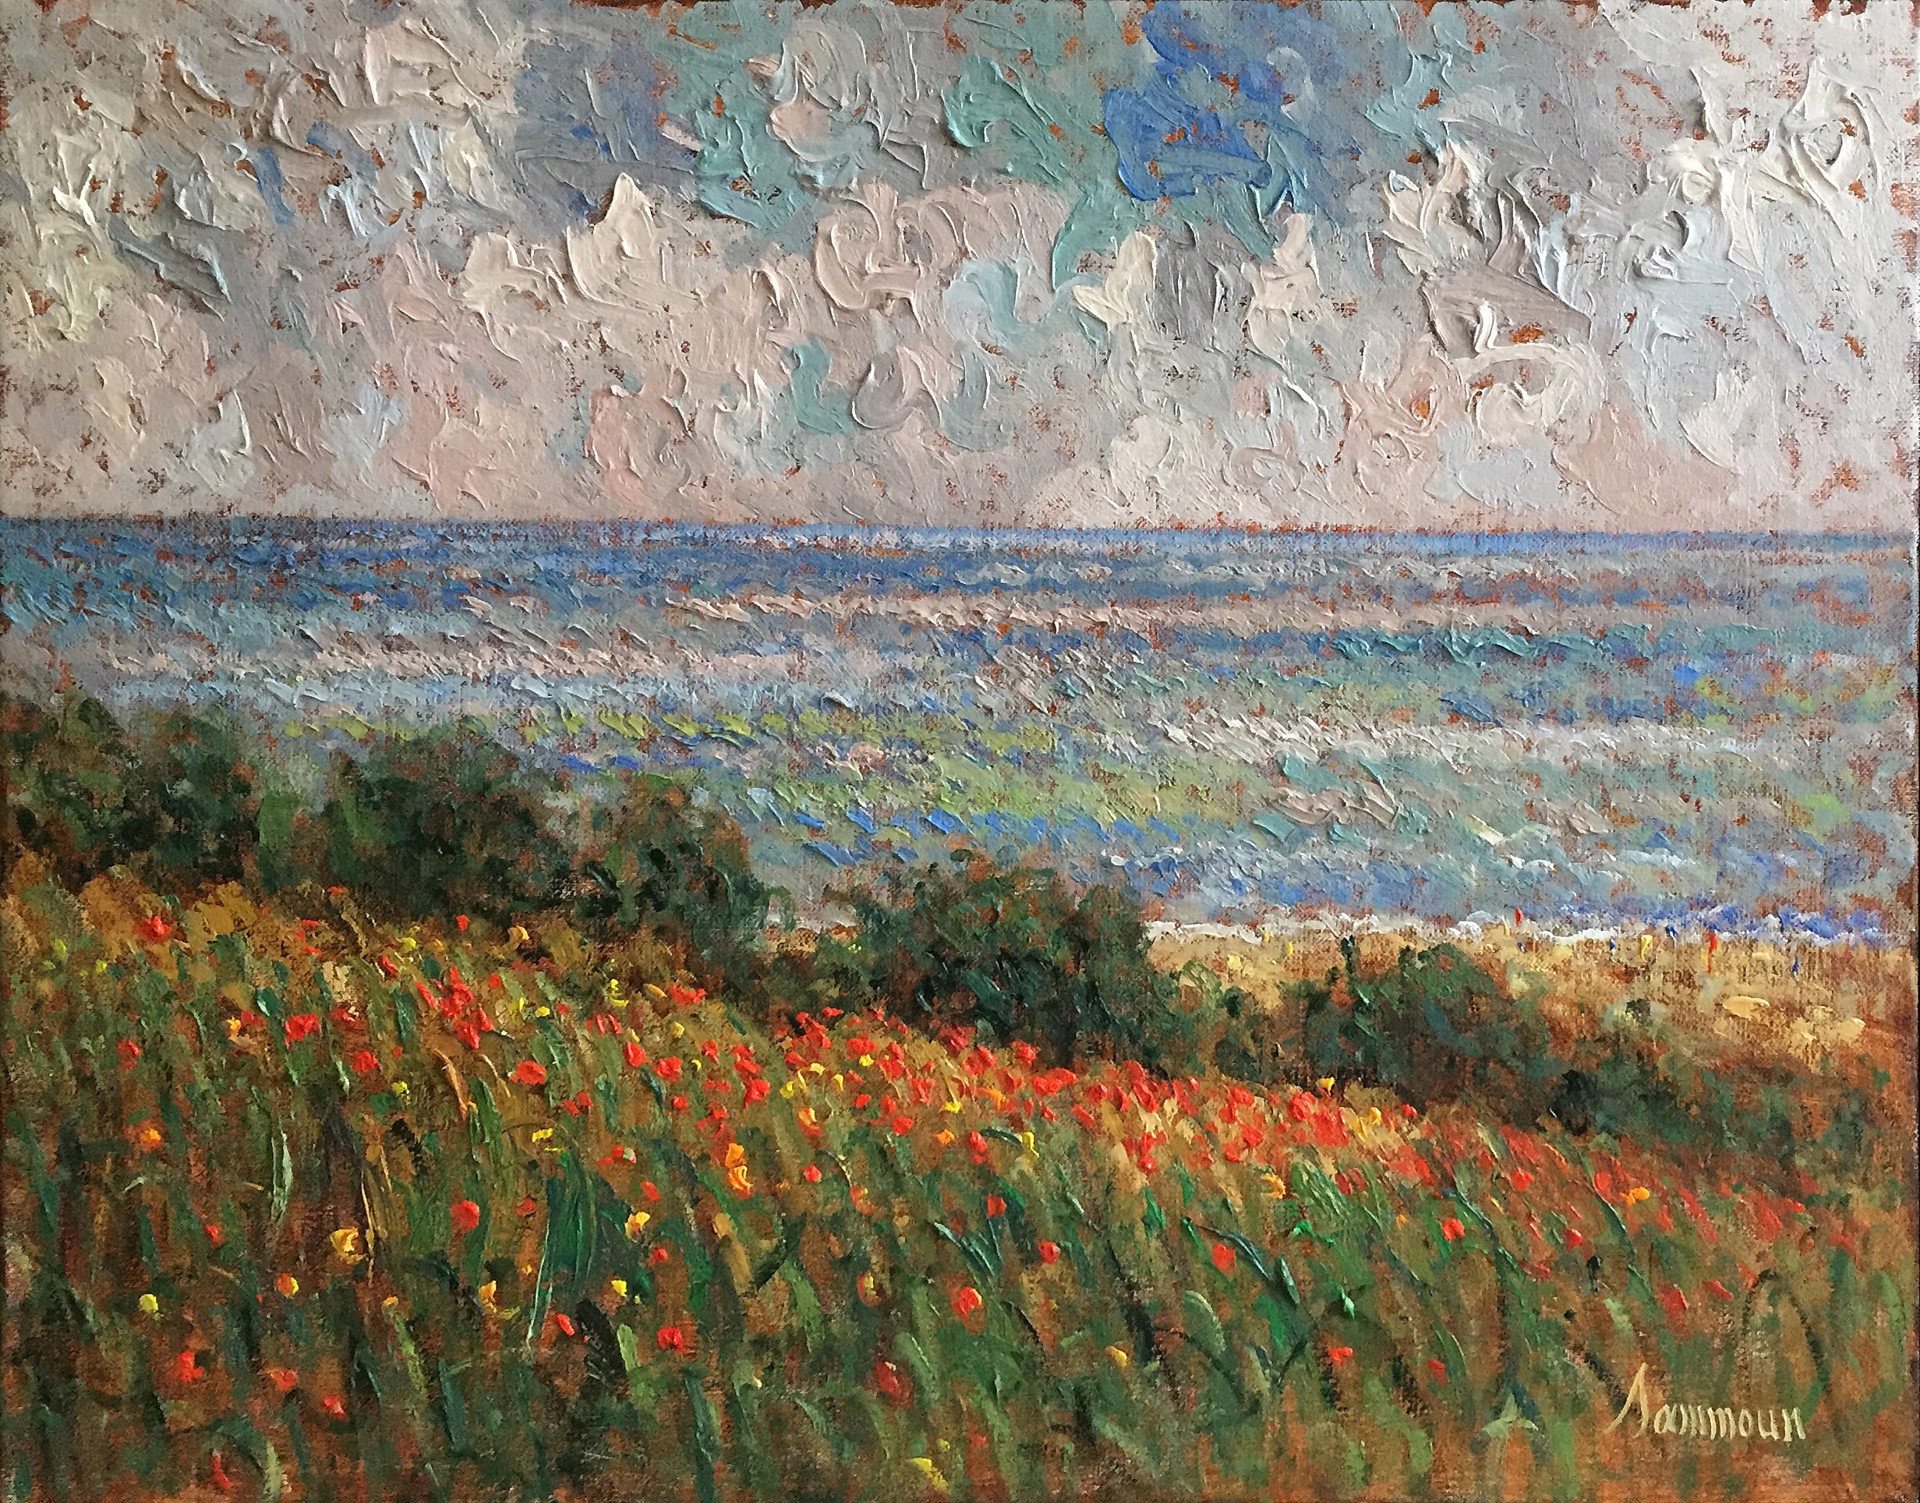 Field of Poppies and the Mediterranean Sea by Samir Sammoun